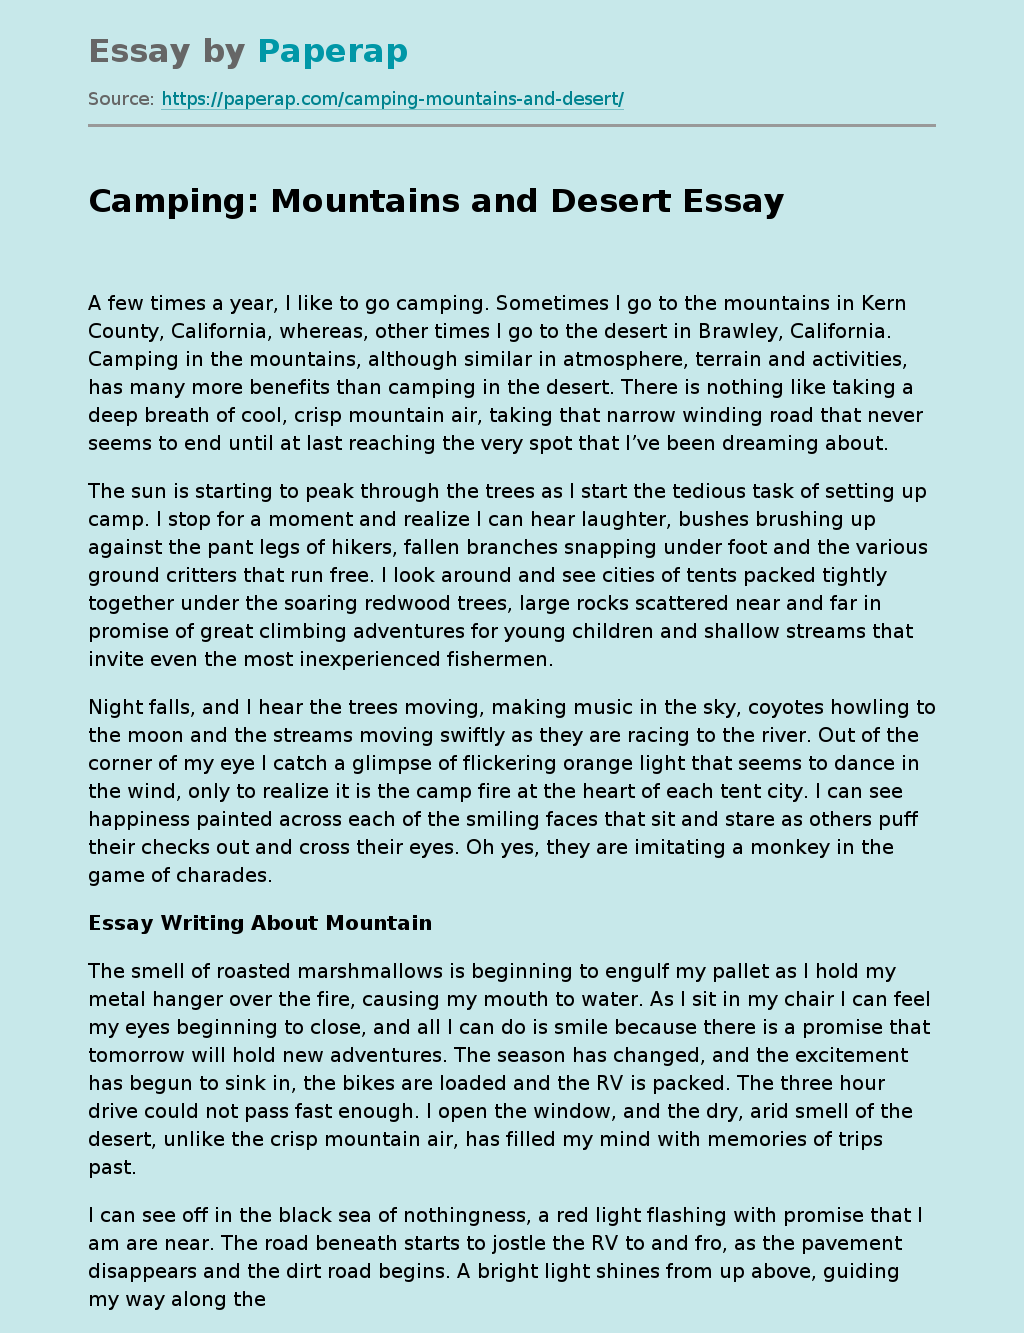 desert lifestyle essay